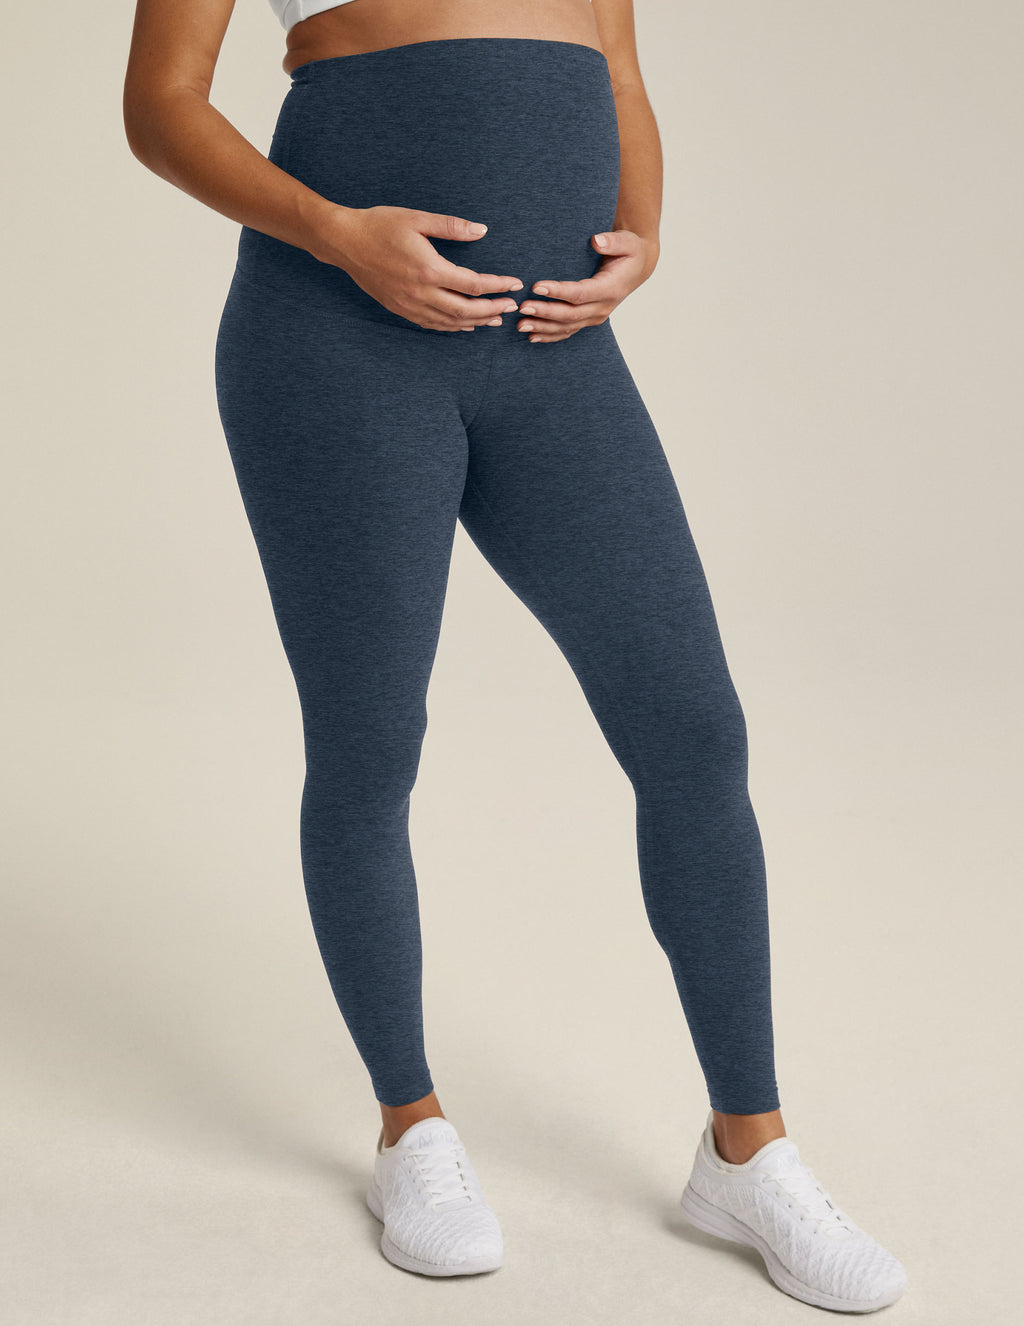 FAFWYP Maternity Leggings Comfy Stretch Workout Leggings Pregnant Capri  Pant over The Belly Postpartum Breastfeeding Pregnancy Yoga Pants